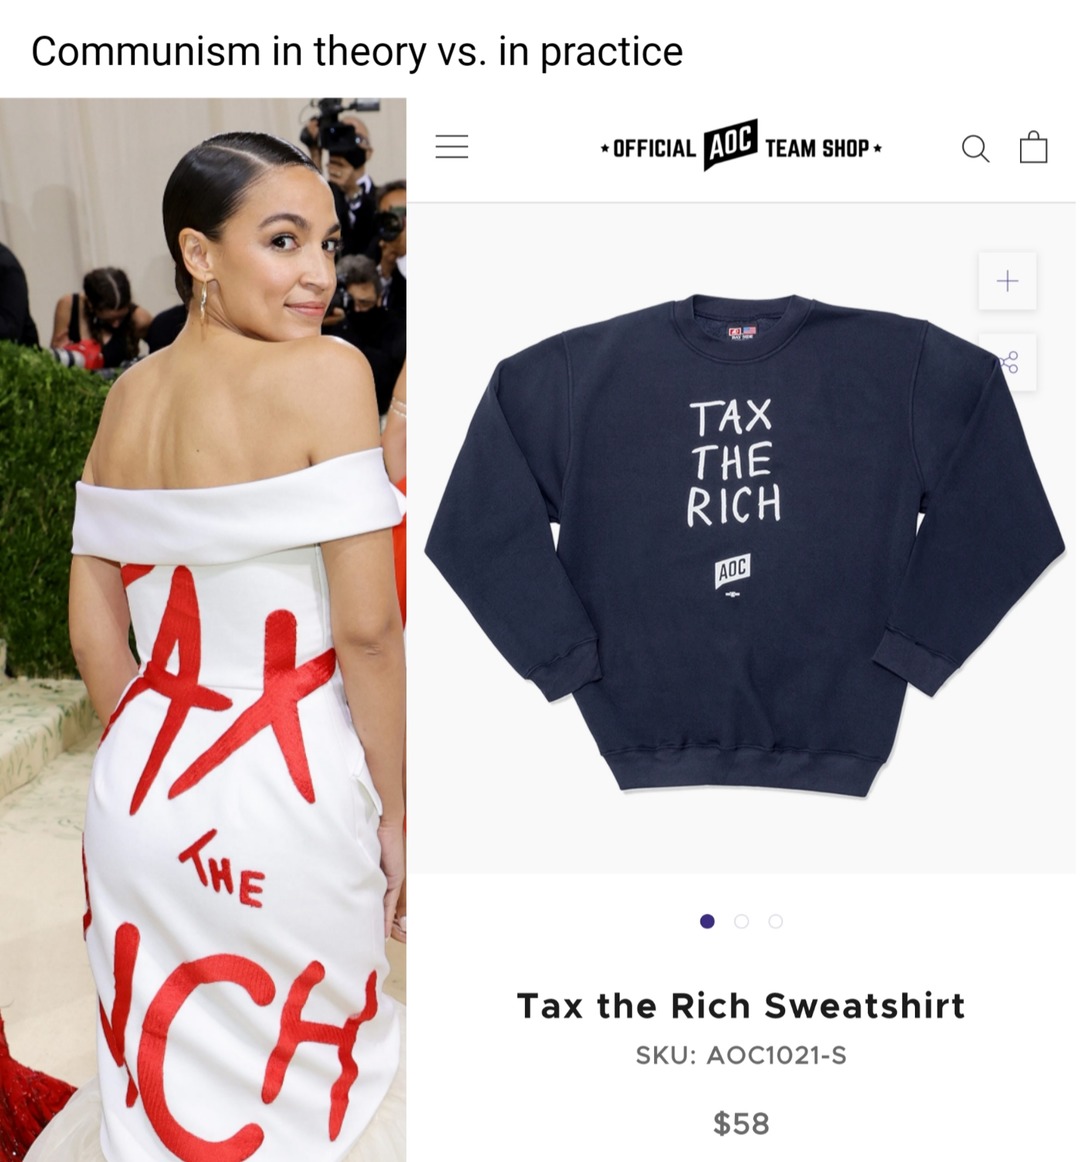 Visit her own merch shop and leave a nice comment https://shop.ocasiocortez.com/products/tax-the-rich-sweatshirt - meme